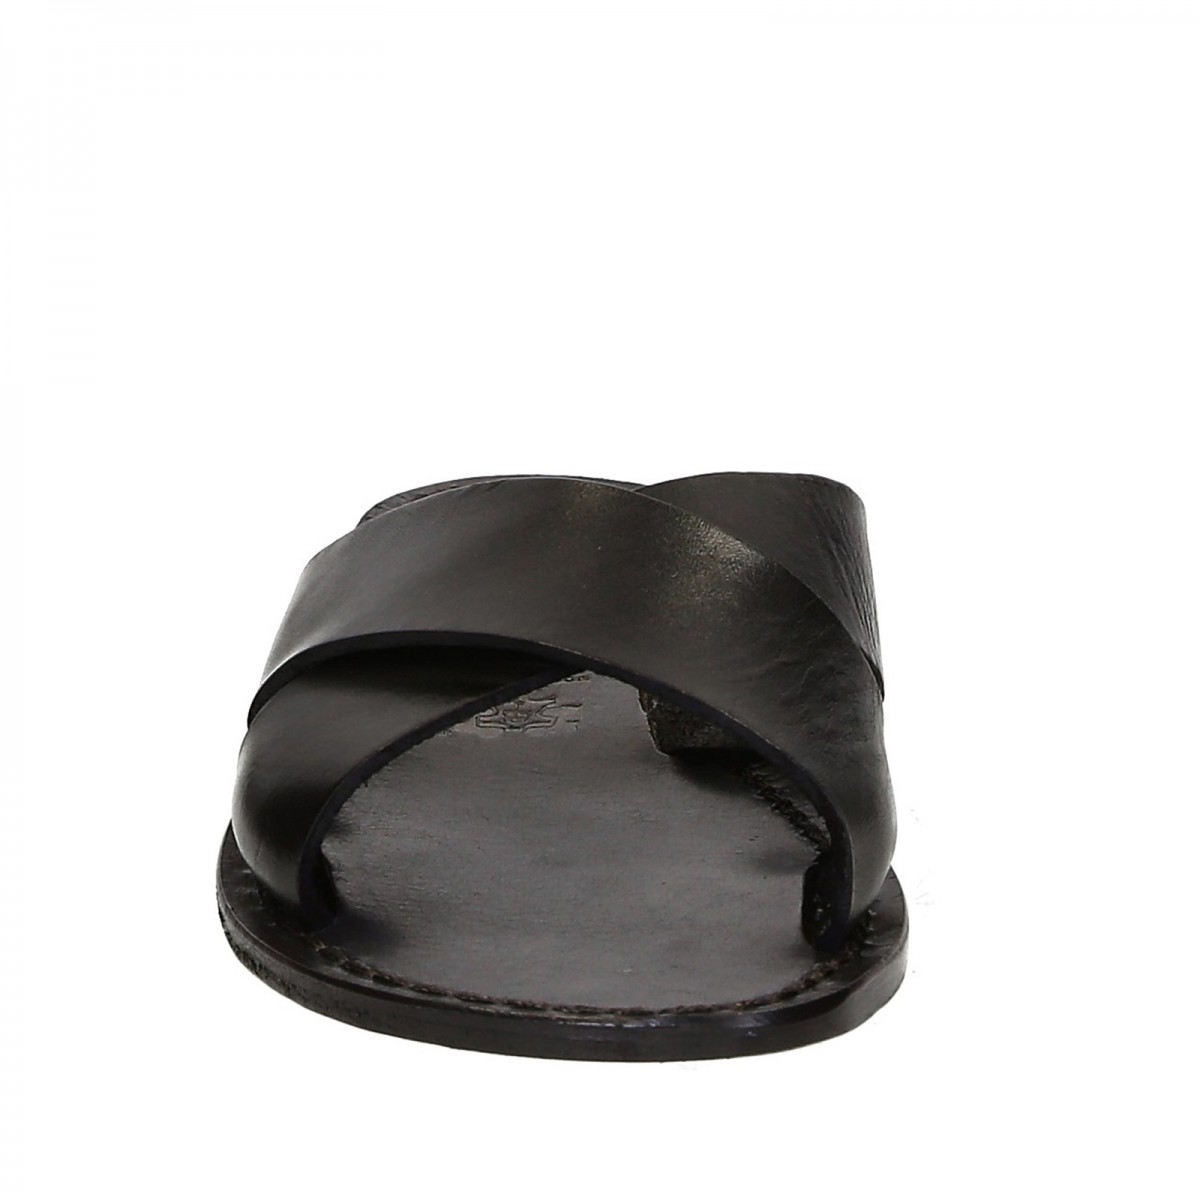 Black leather slide sandals for women handmade | Gianluca - The leather ...